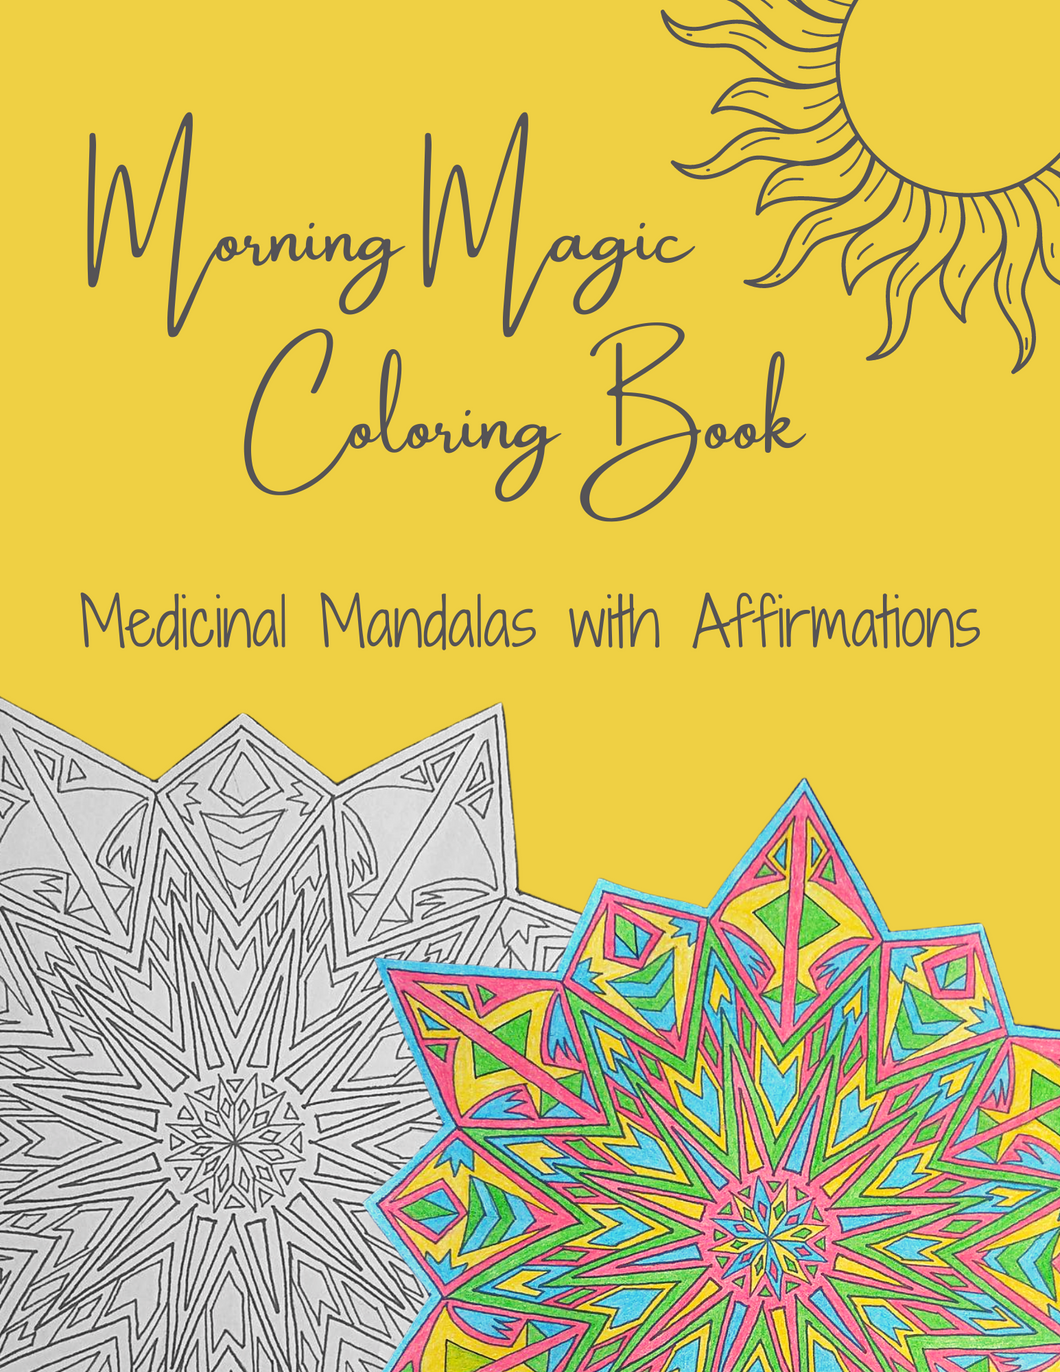 Morning Magic Coloring Book